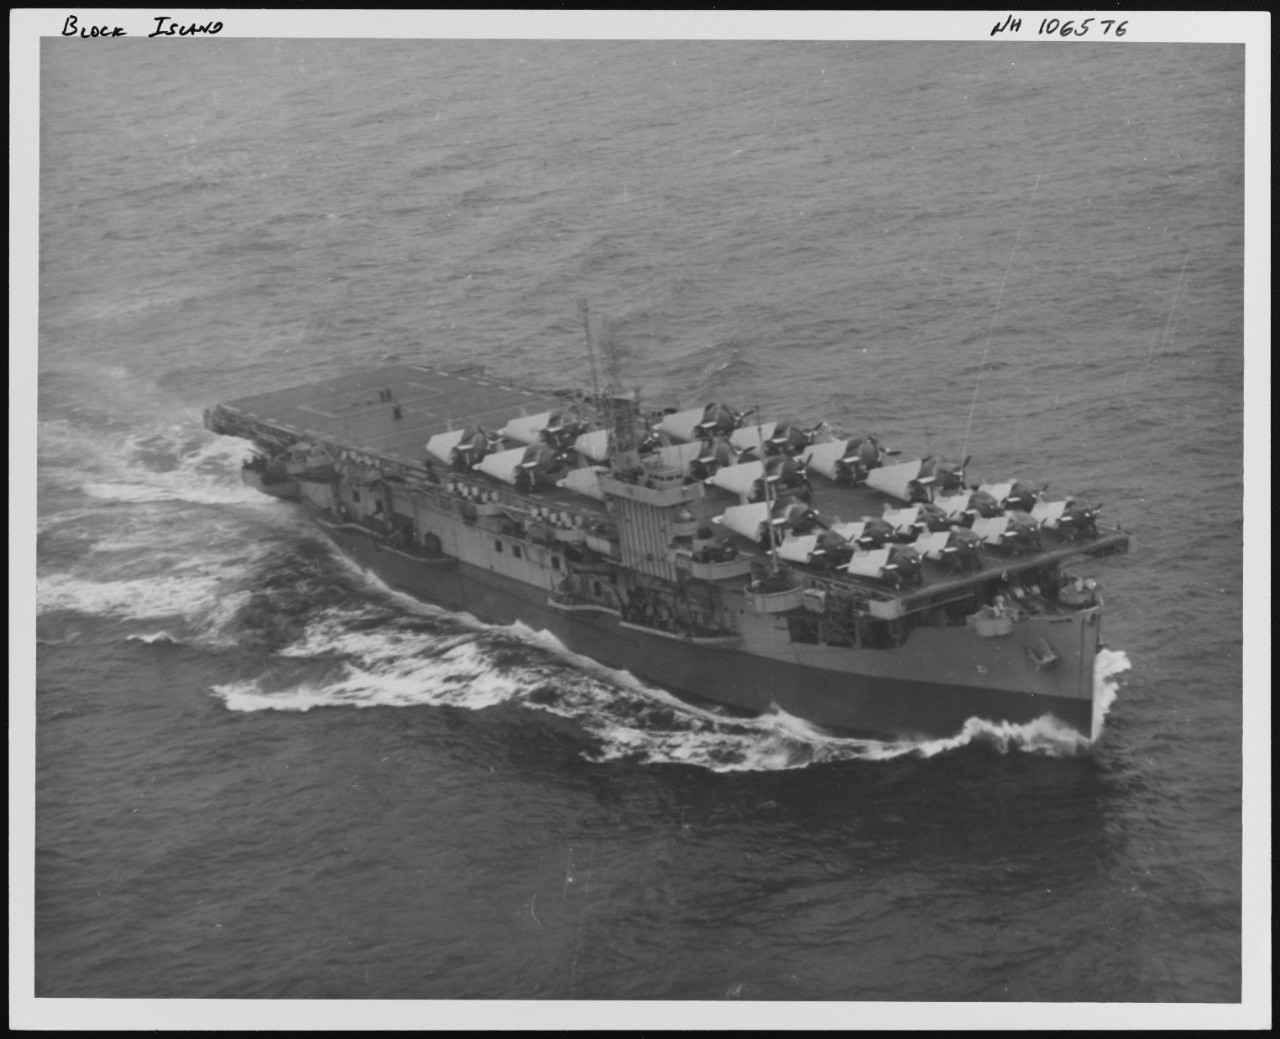 Photo # NH 106576  USS Block Island